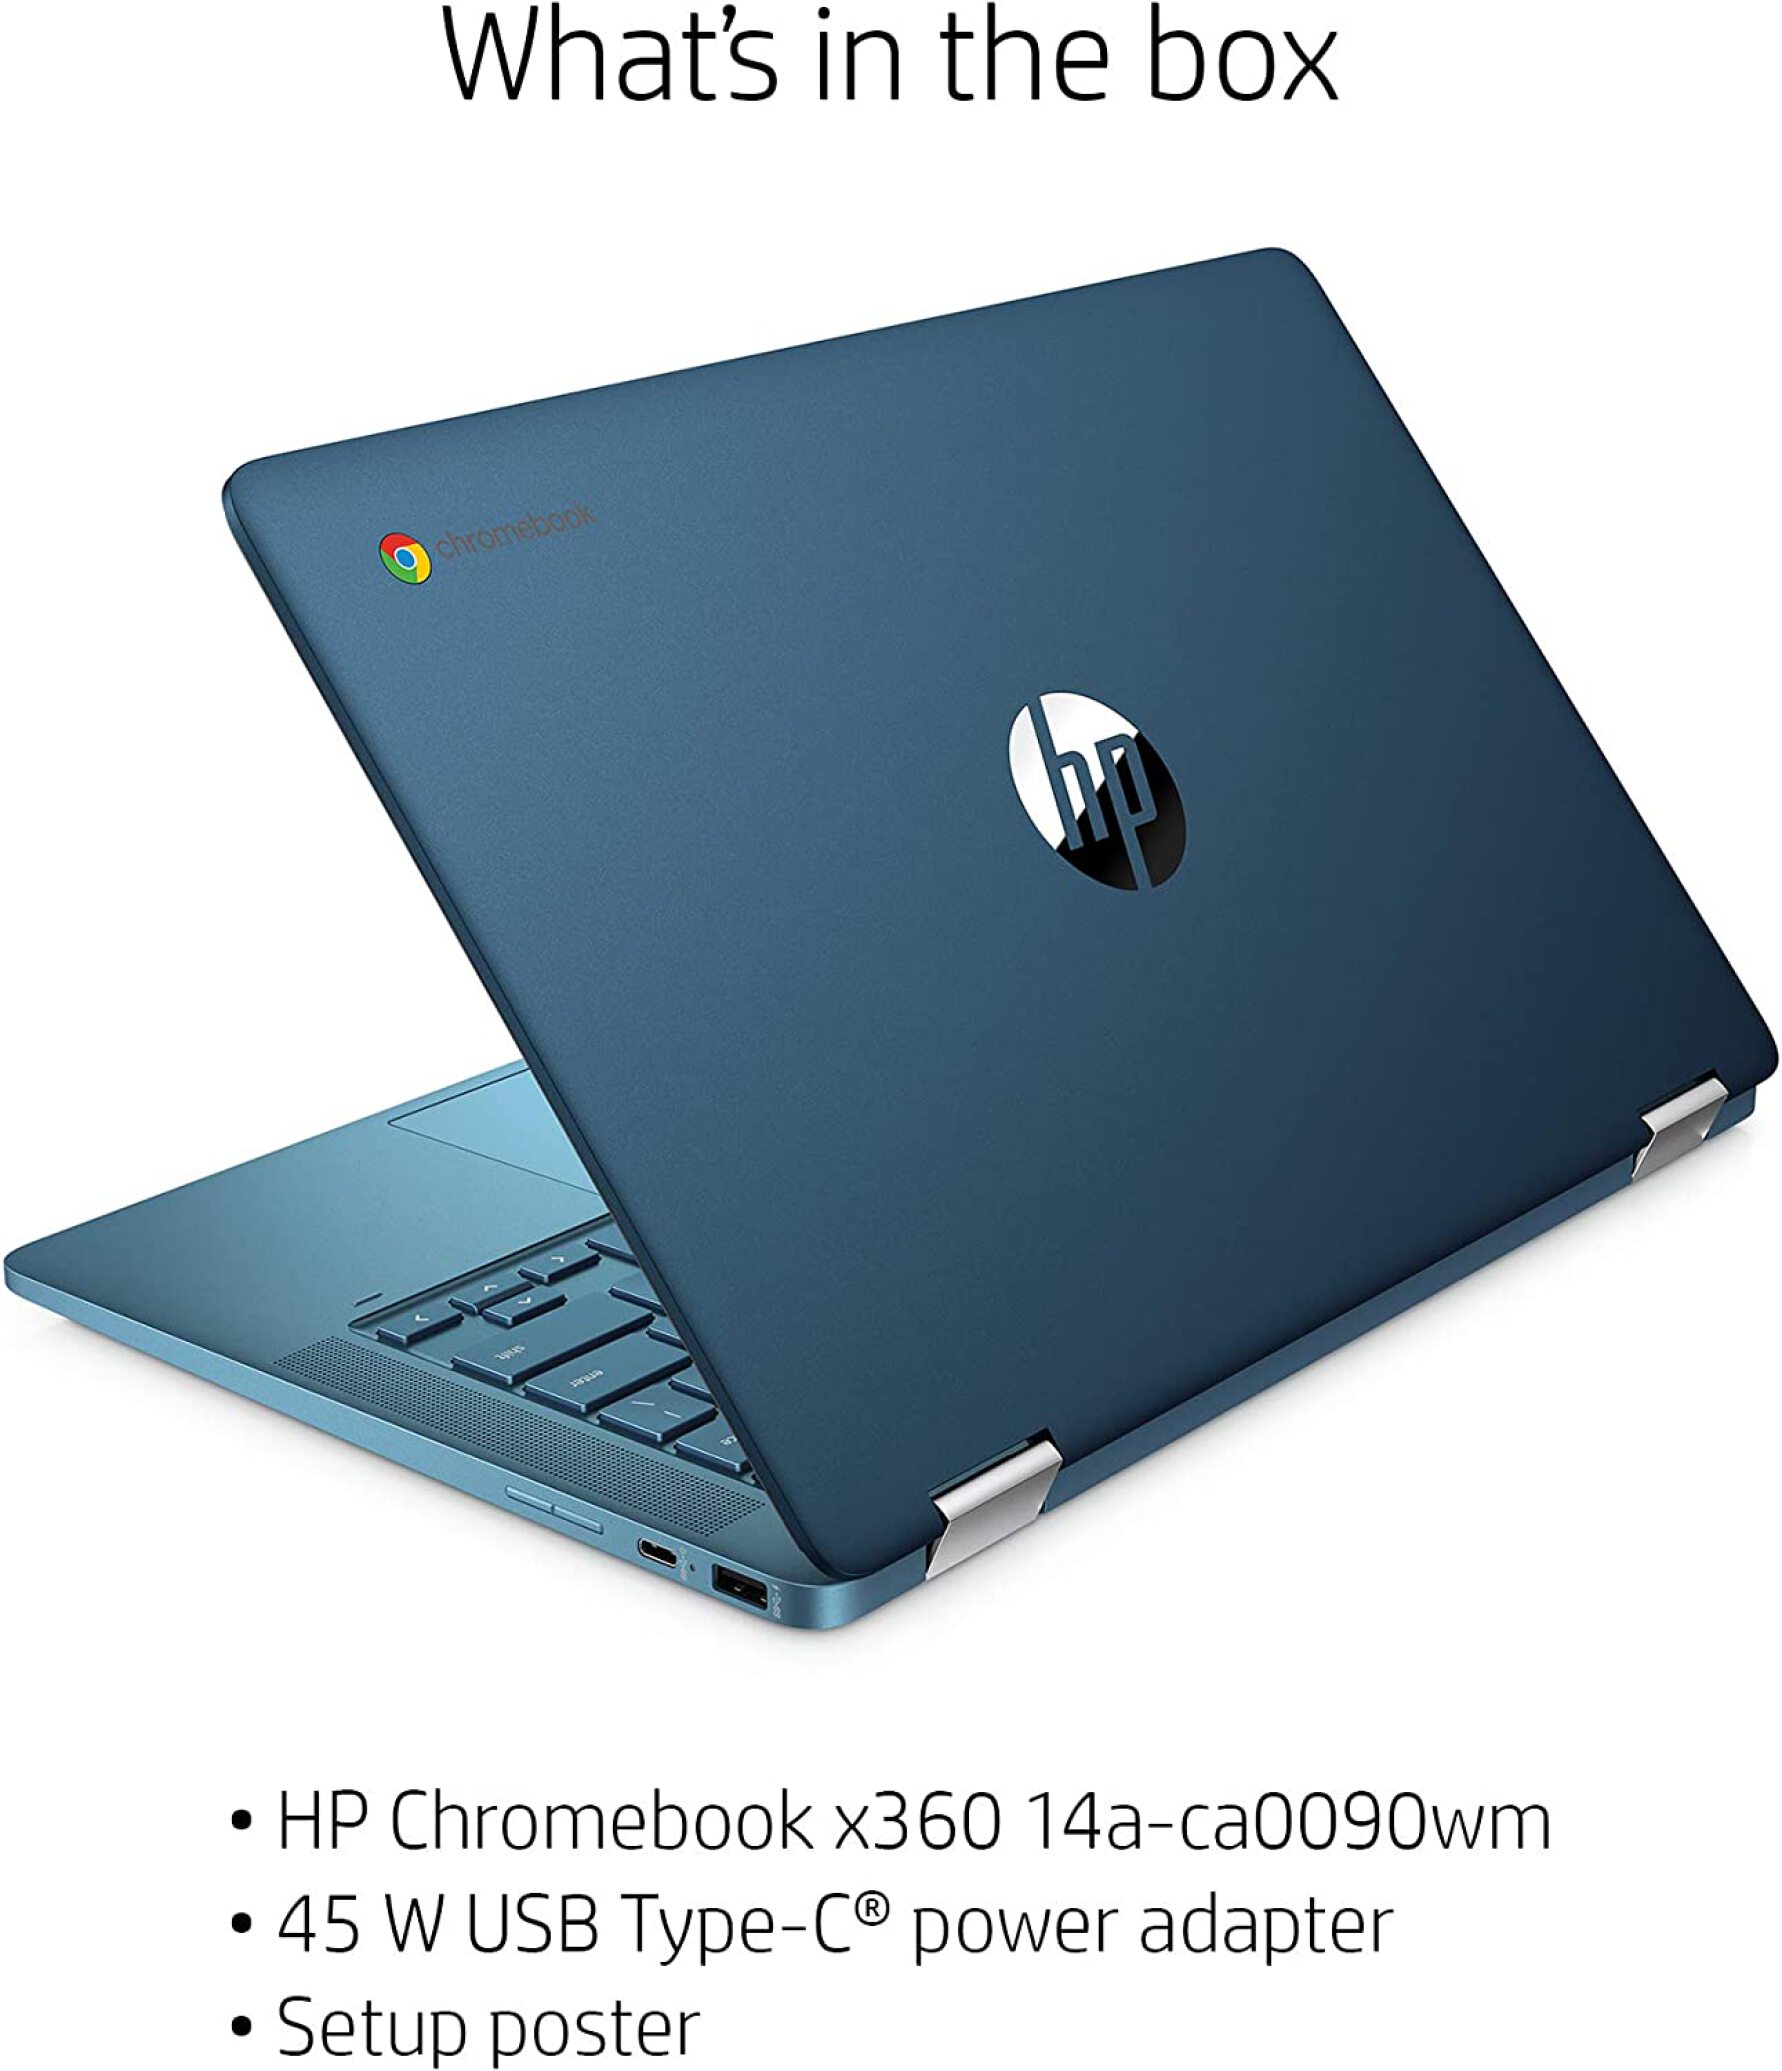  لپ تاپ اچ پی کروم بوک 360 درجه لمسی intel Pentium N6000 | لاکچری لپتاپ 